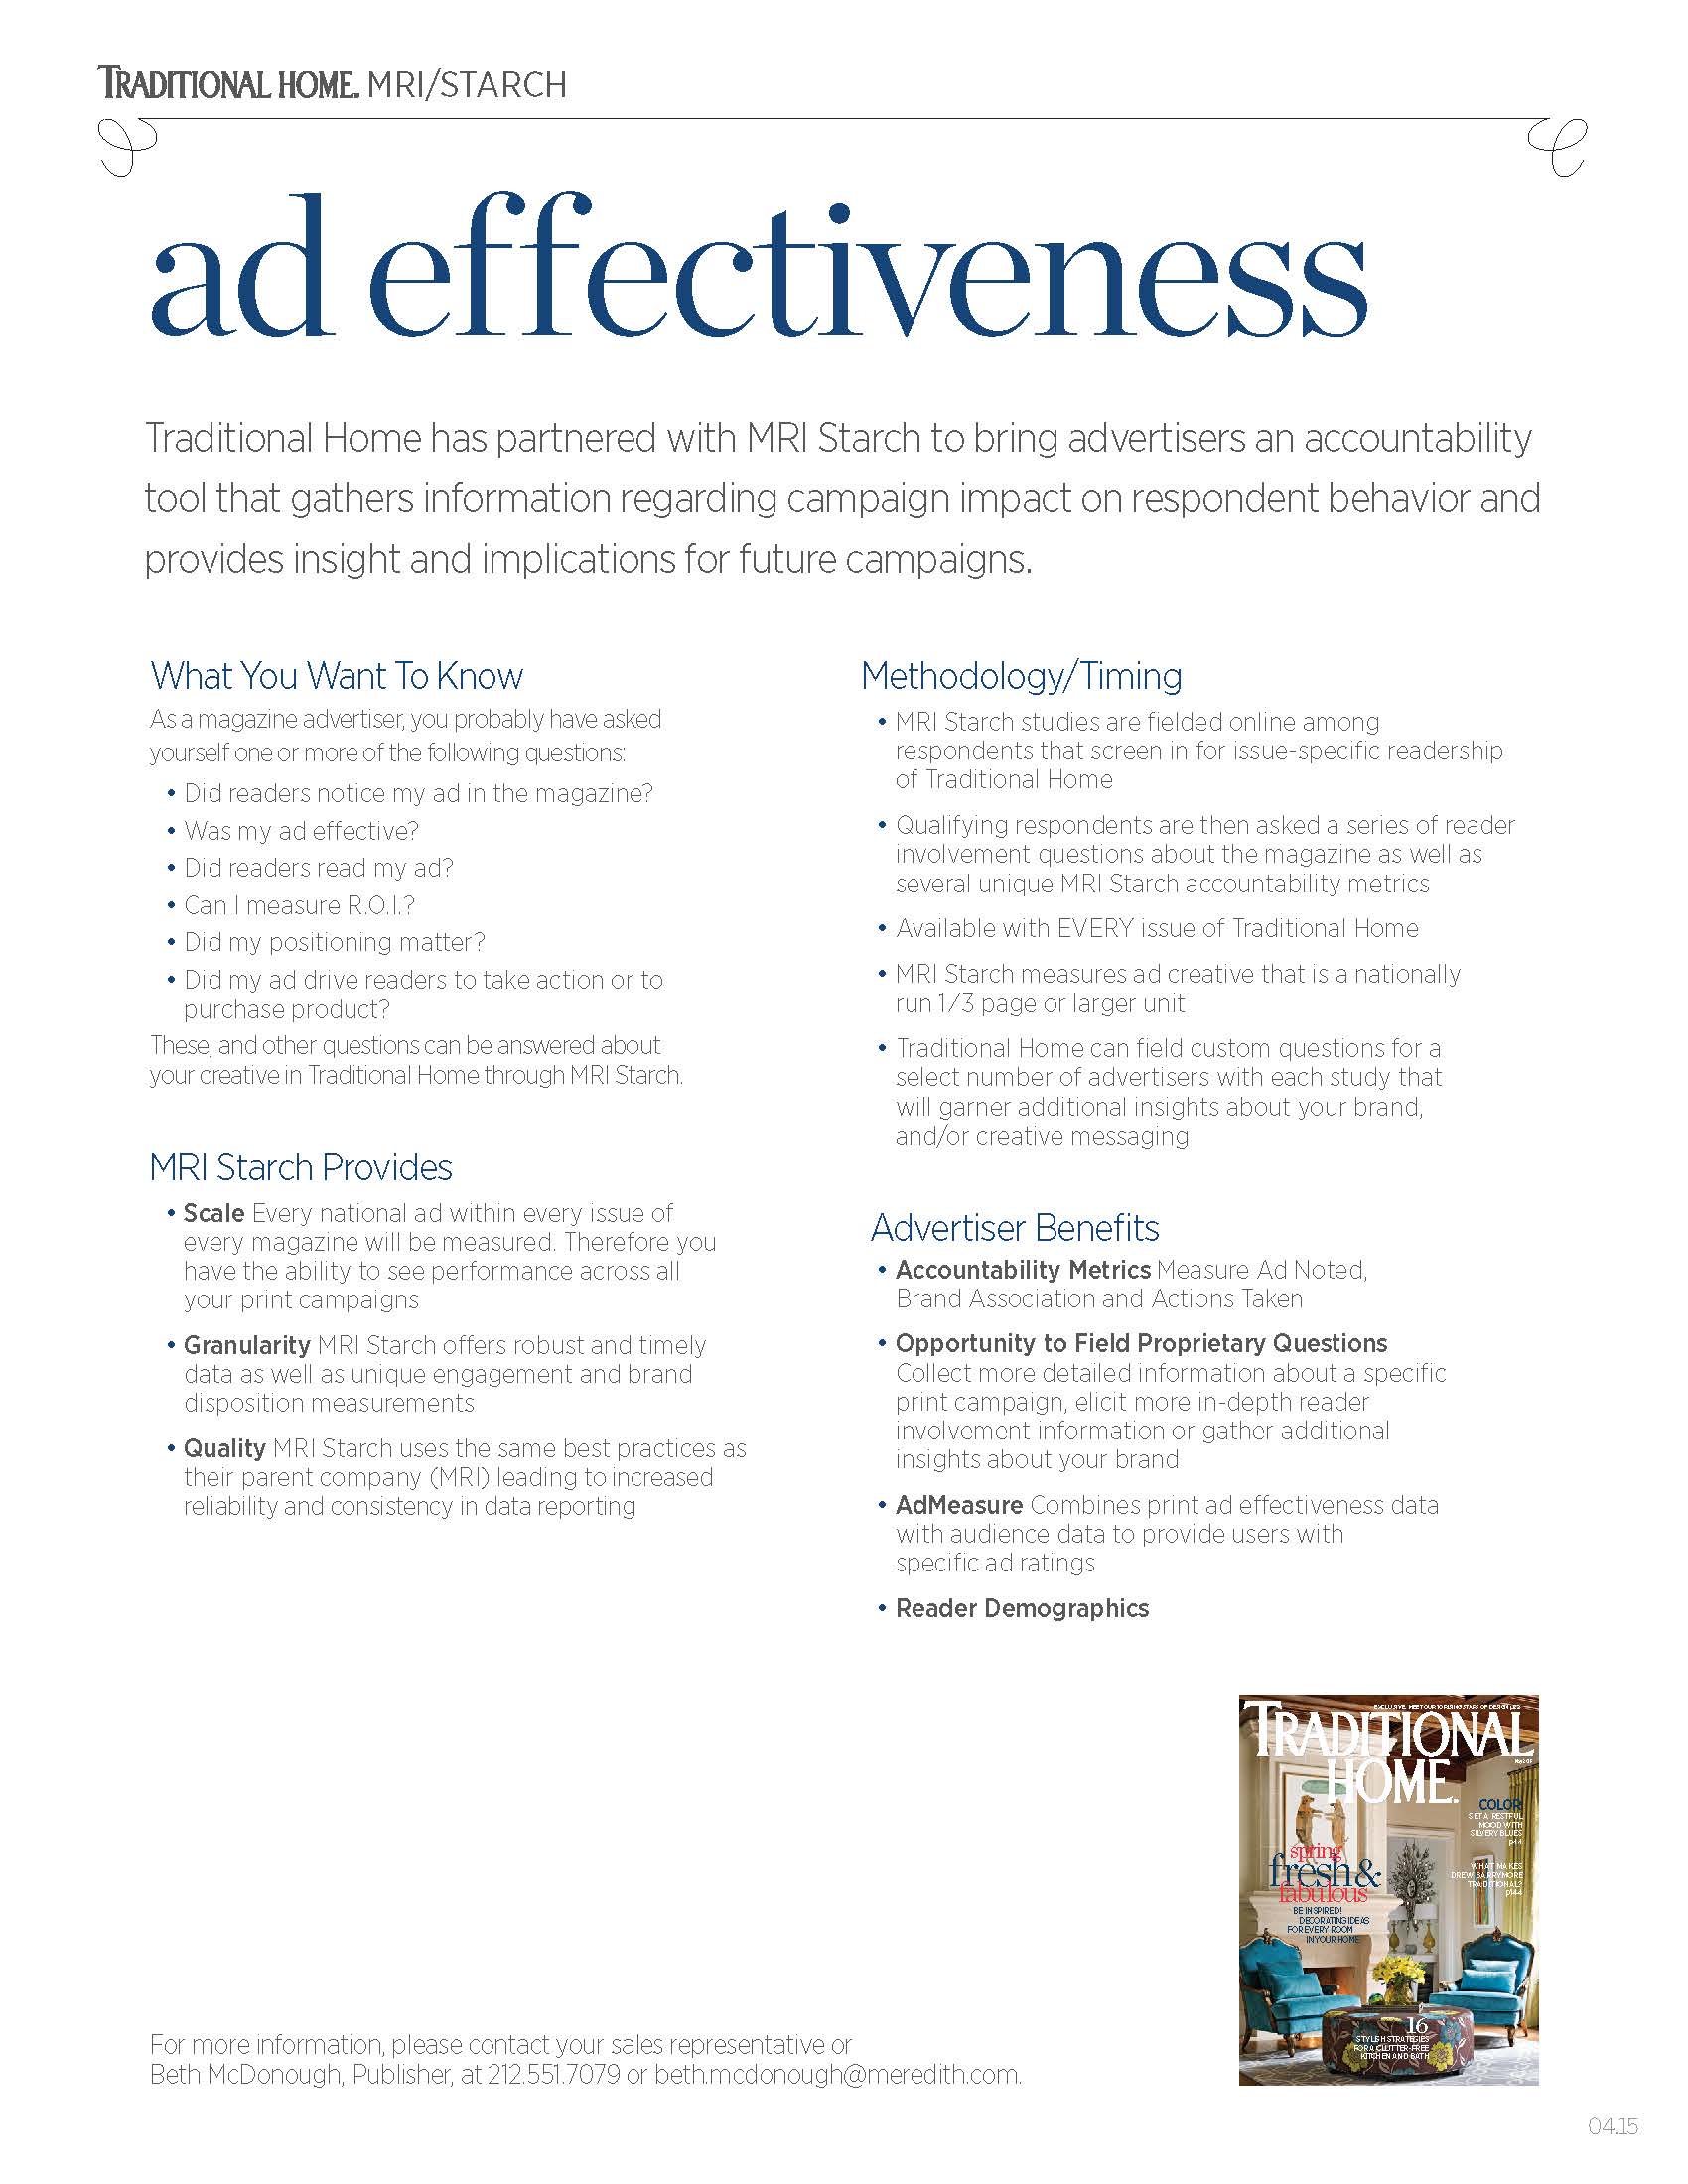 Ad-Effectiveness_2015.jpg